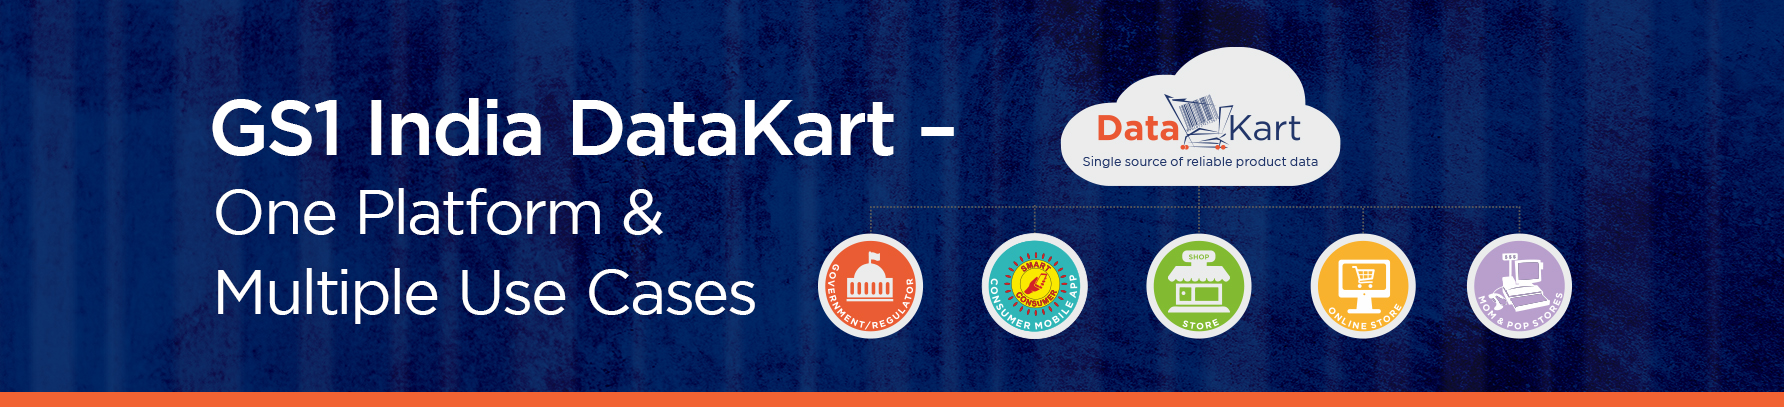 GS1 India DataKart – One Platform, Multiple Use Cases